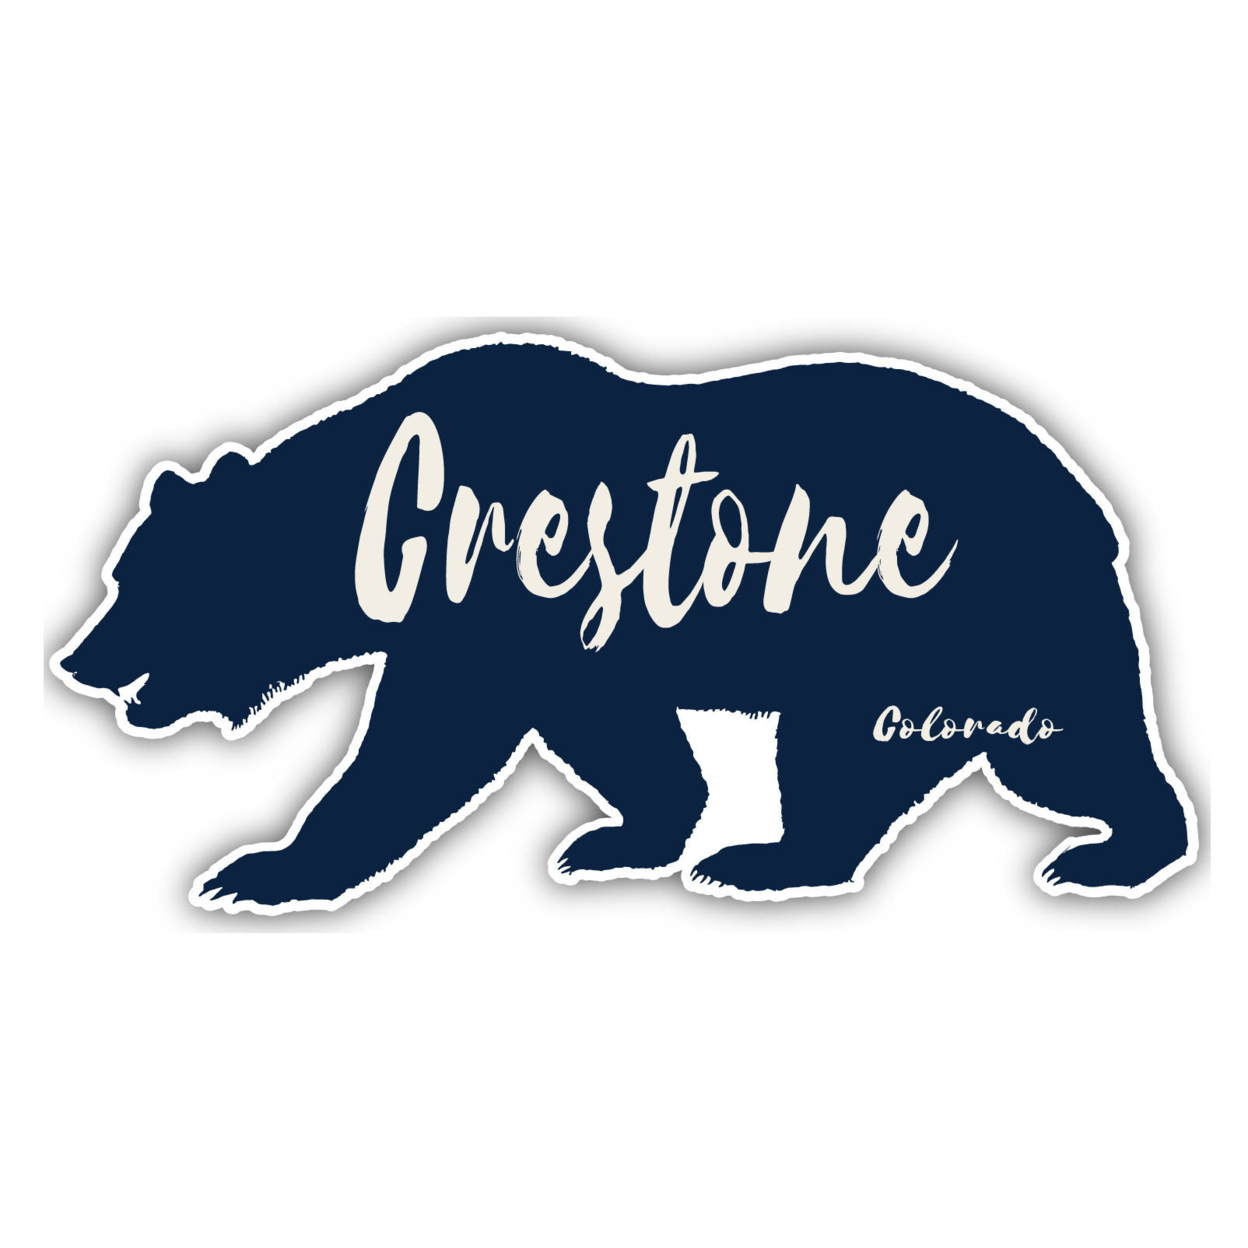 Crestone Colorado Souvenir Decorative Stickers (Choose Theme And Size) - 4-Pack, 4-Inch, Bear